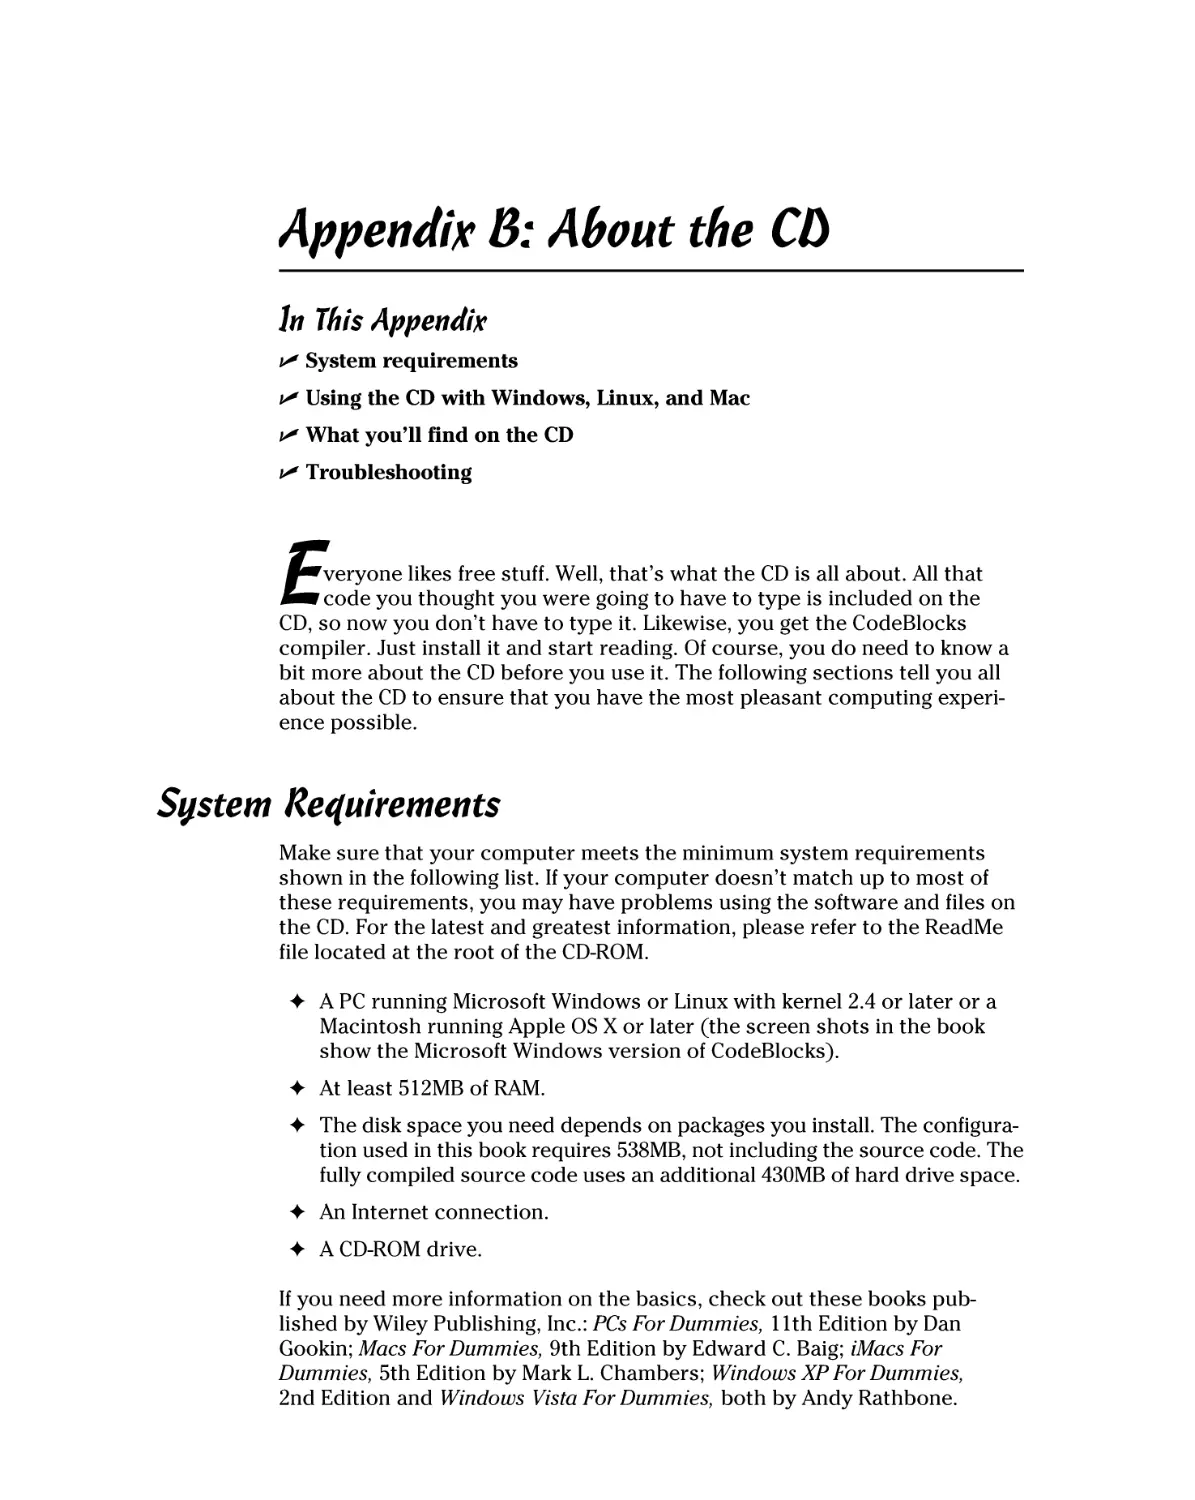 Appendix B
System Requirements